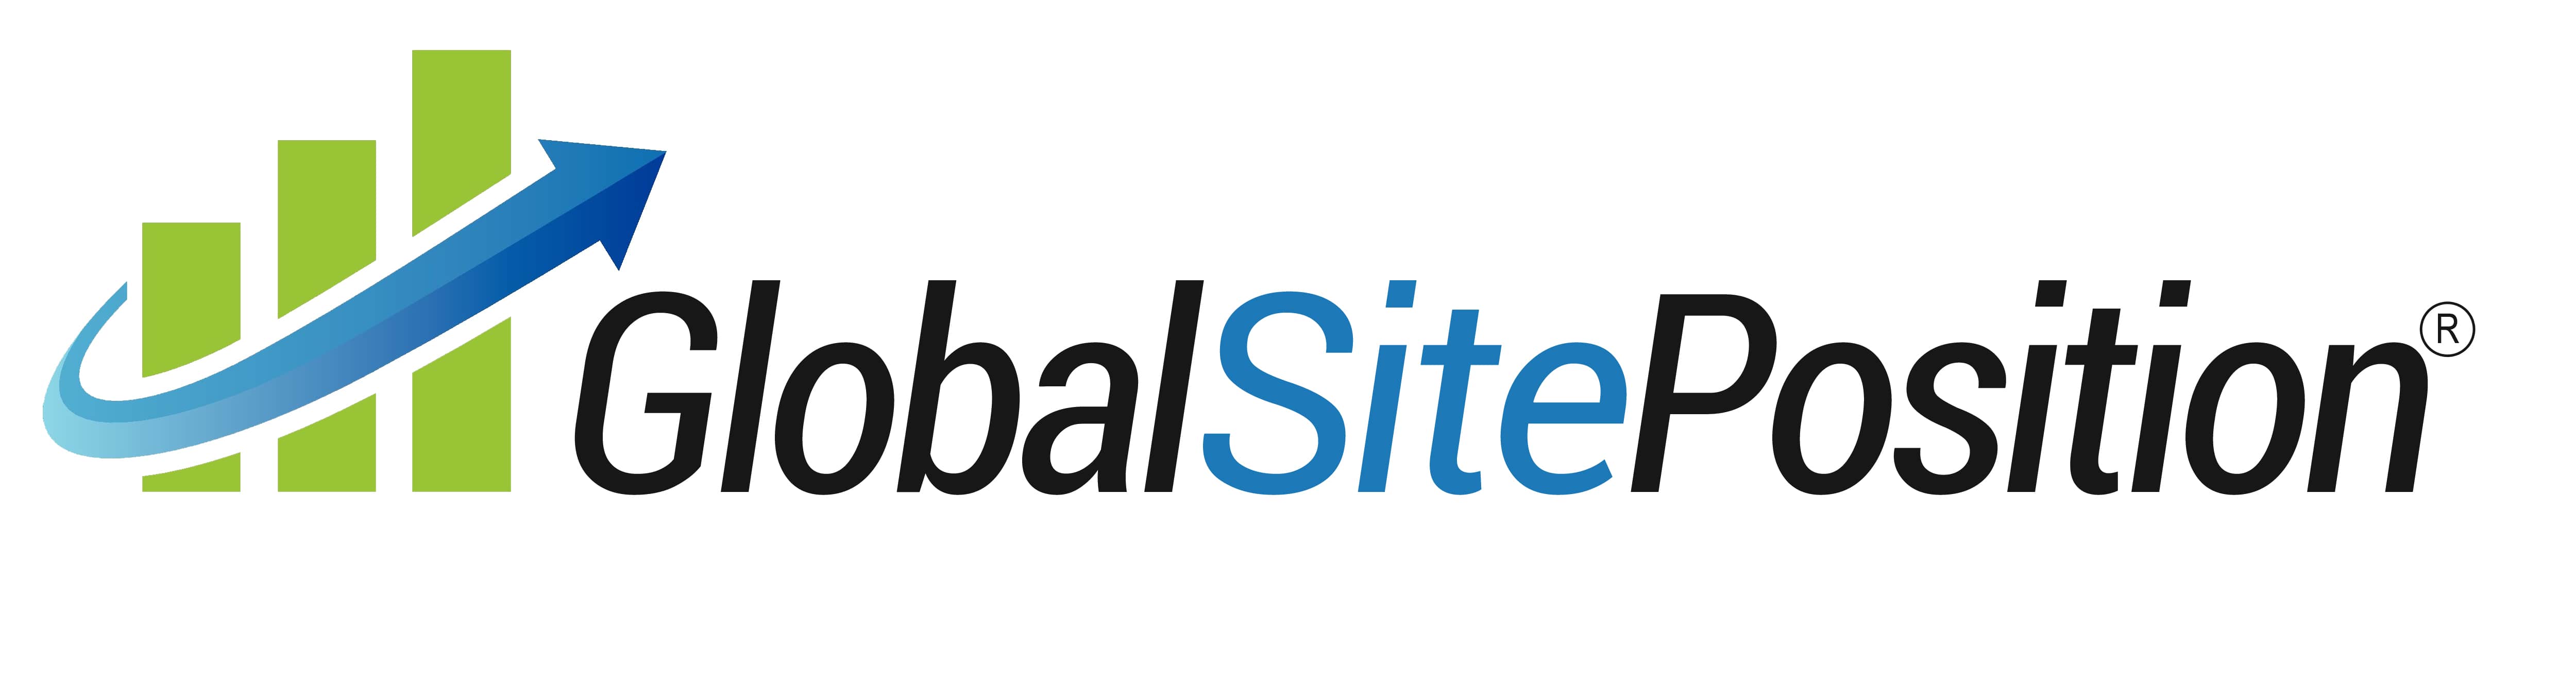 Global Site Position Logo